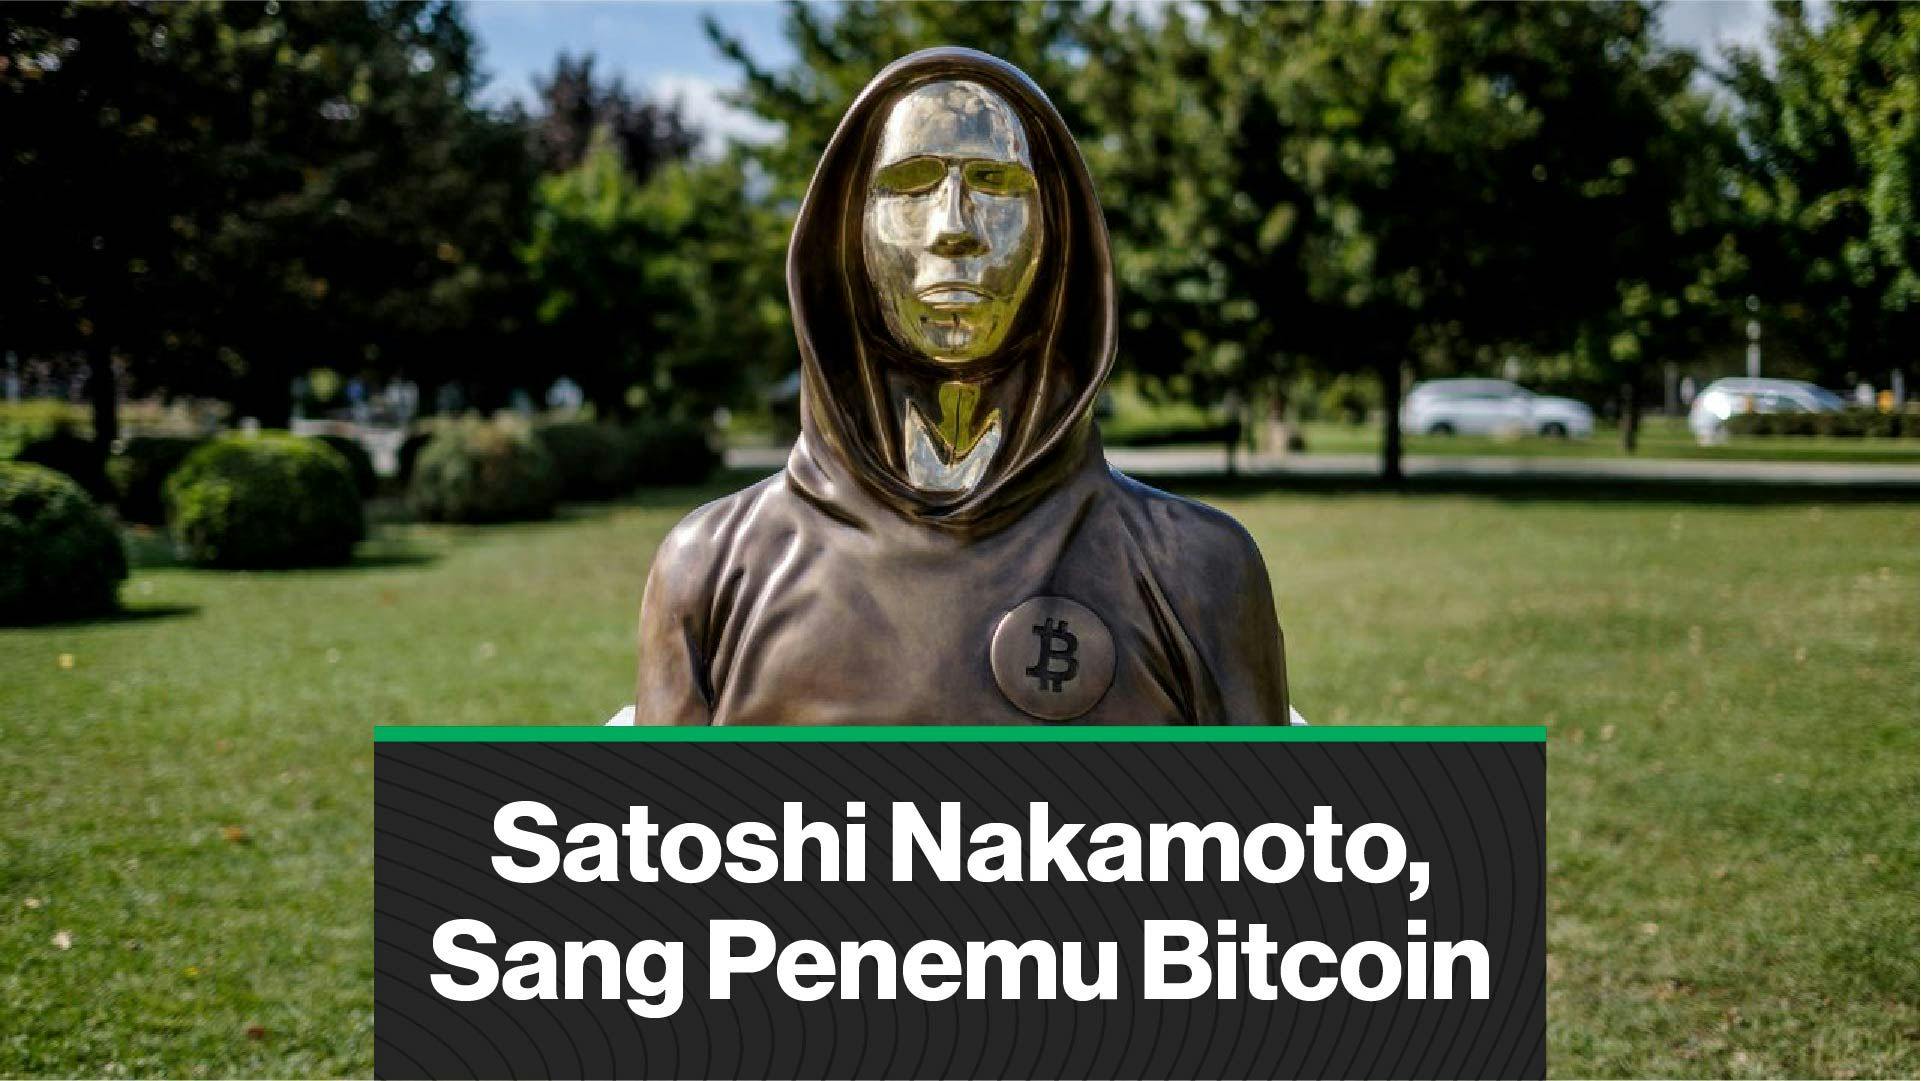 Mengenal Sang Penemu Bitcoin, Satoshi Nakamoto (Coindesk Indonesia)